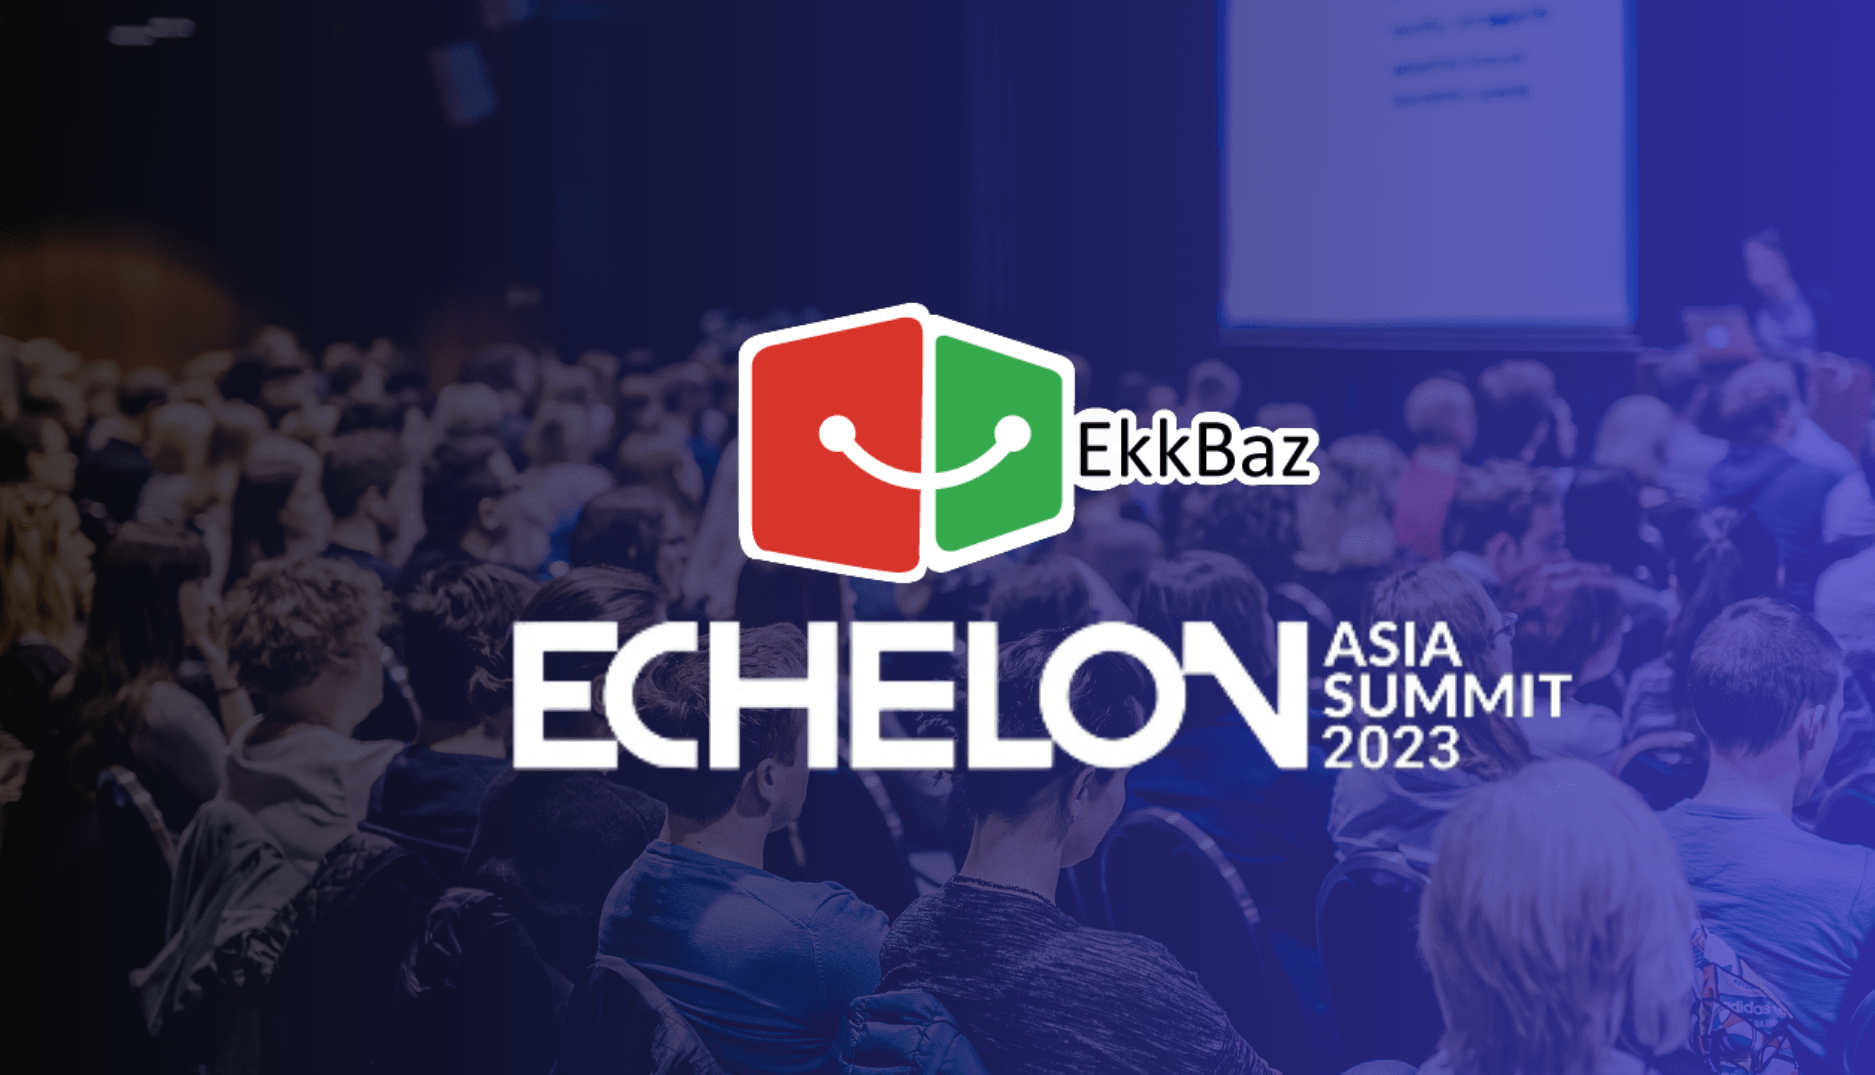 EkkBaz Selected Among The TOP 10 Startups in APAC at Echelon Asia Summit-Markedium